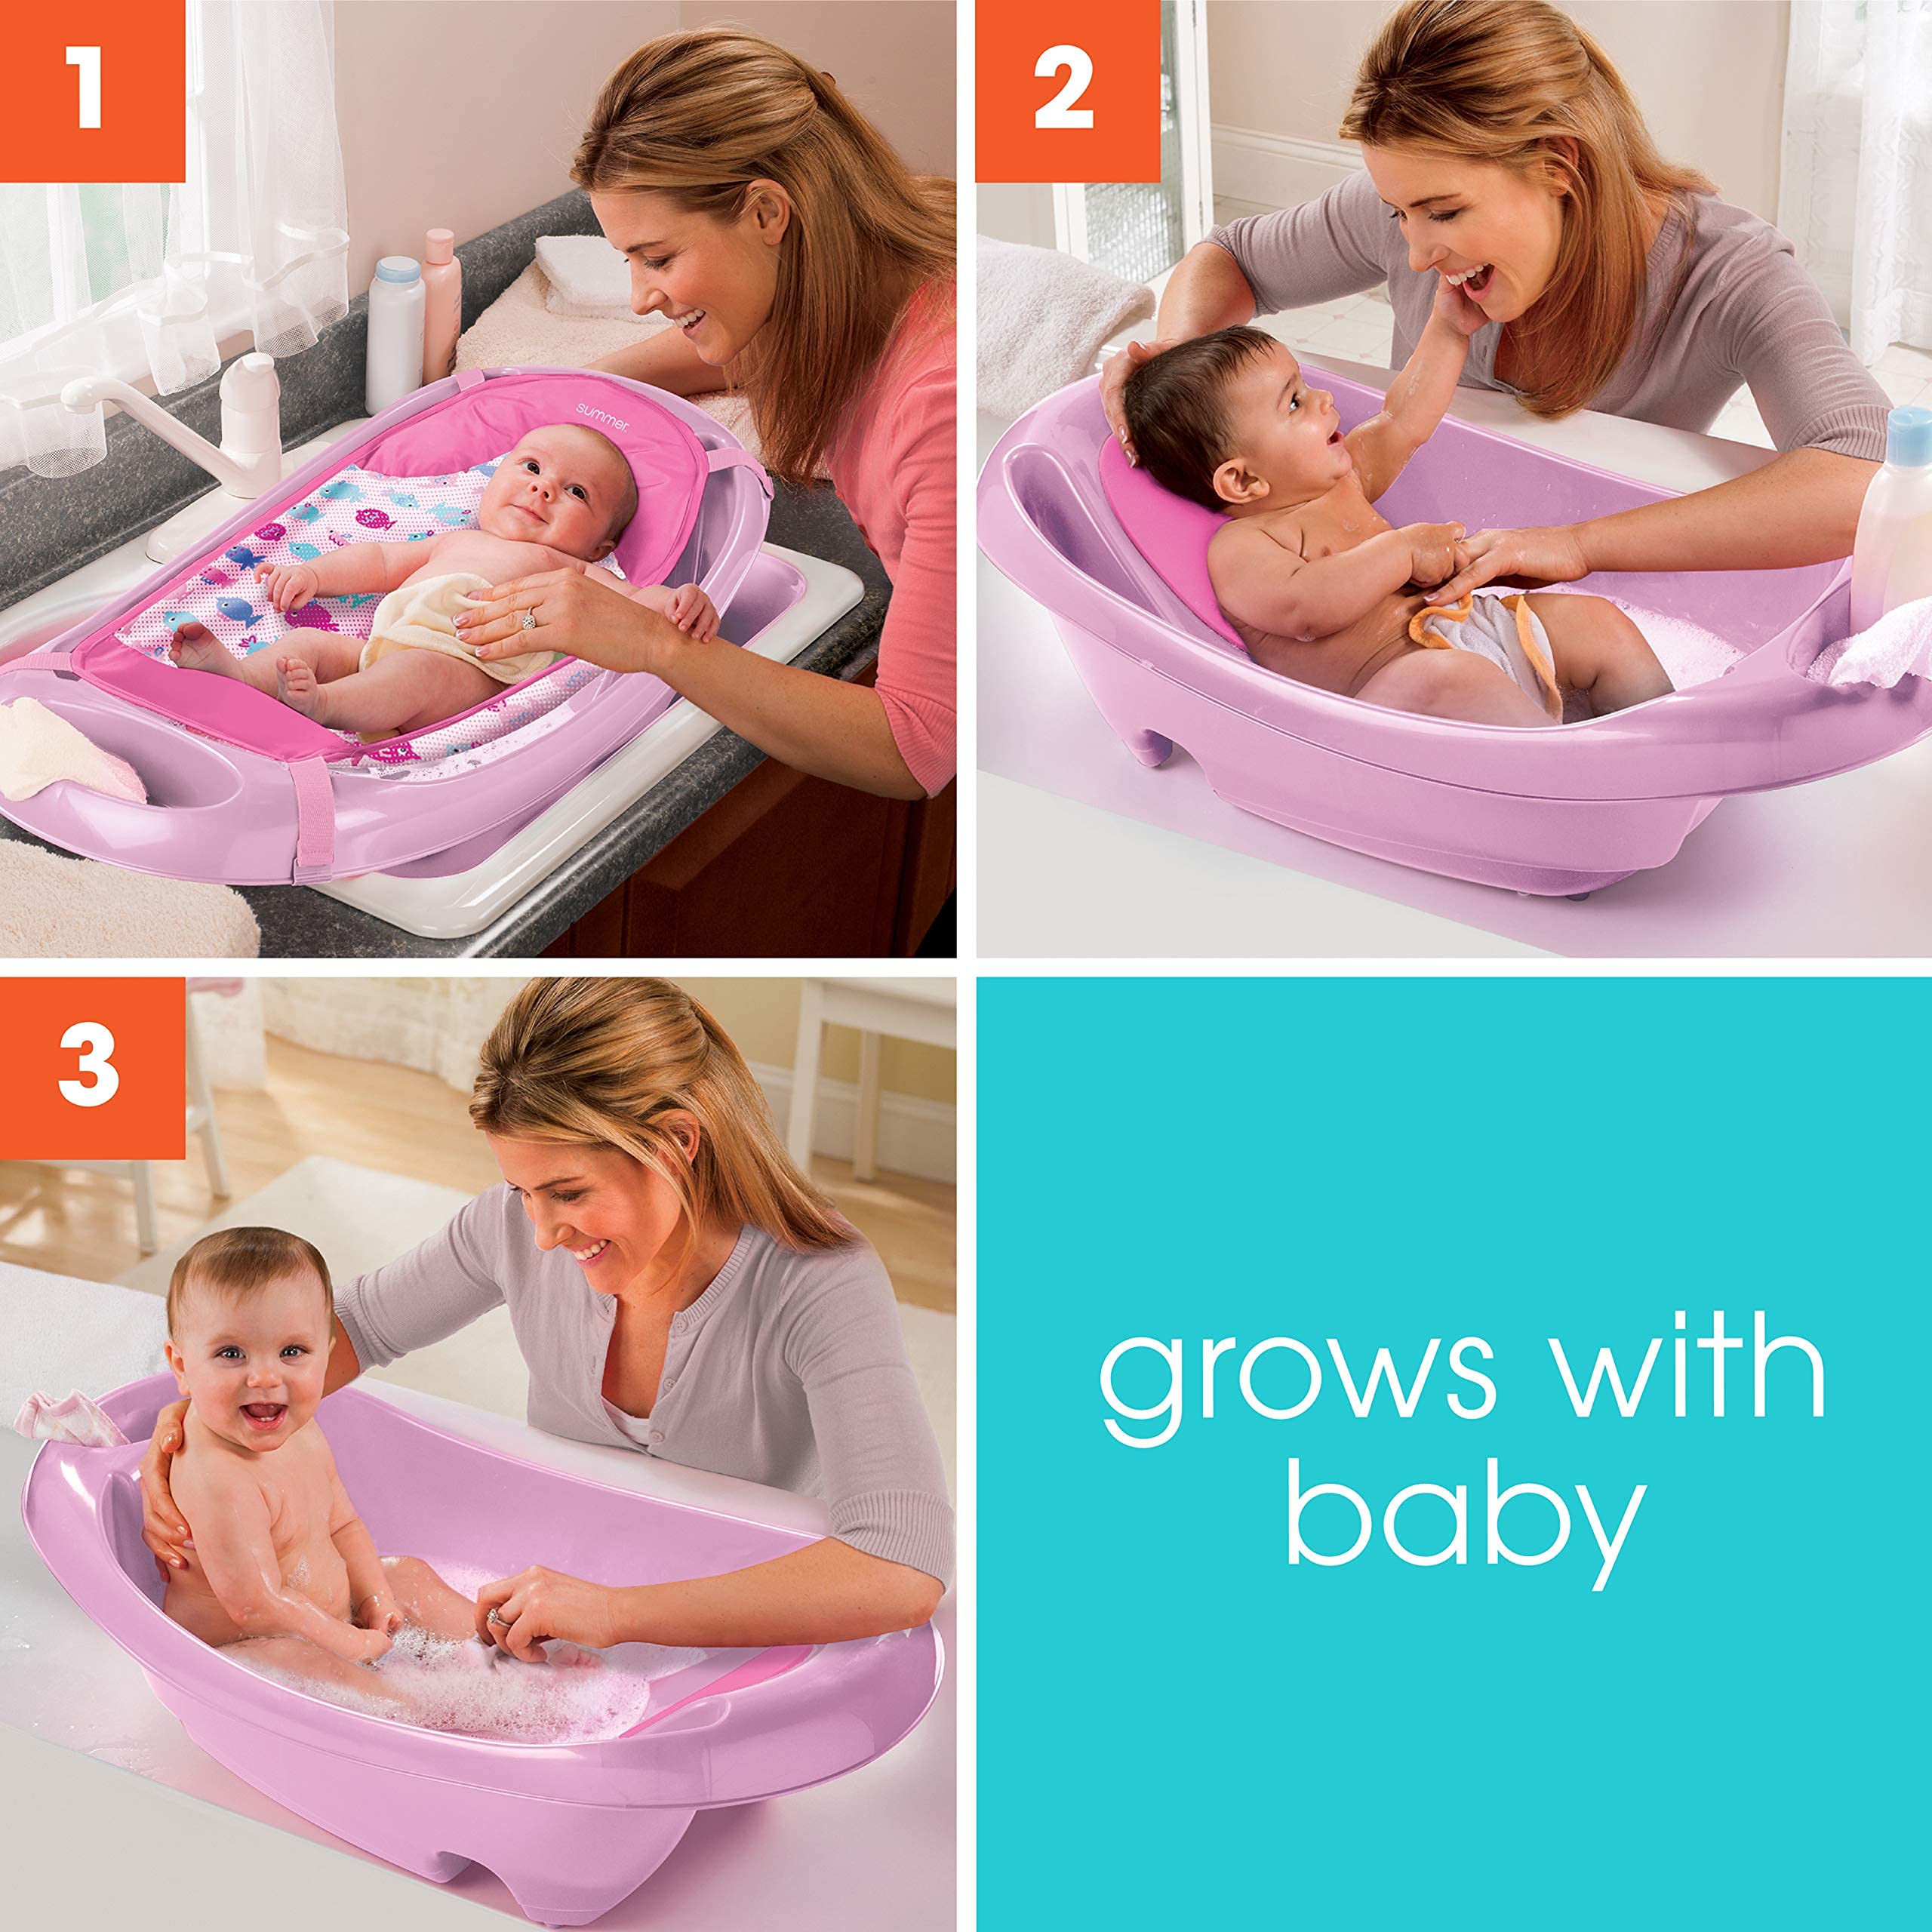 Summer Splish 'N Splash Newborn to Toddler Bath Tub, Pink